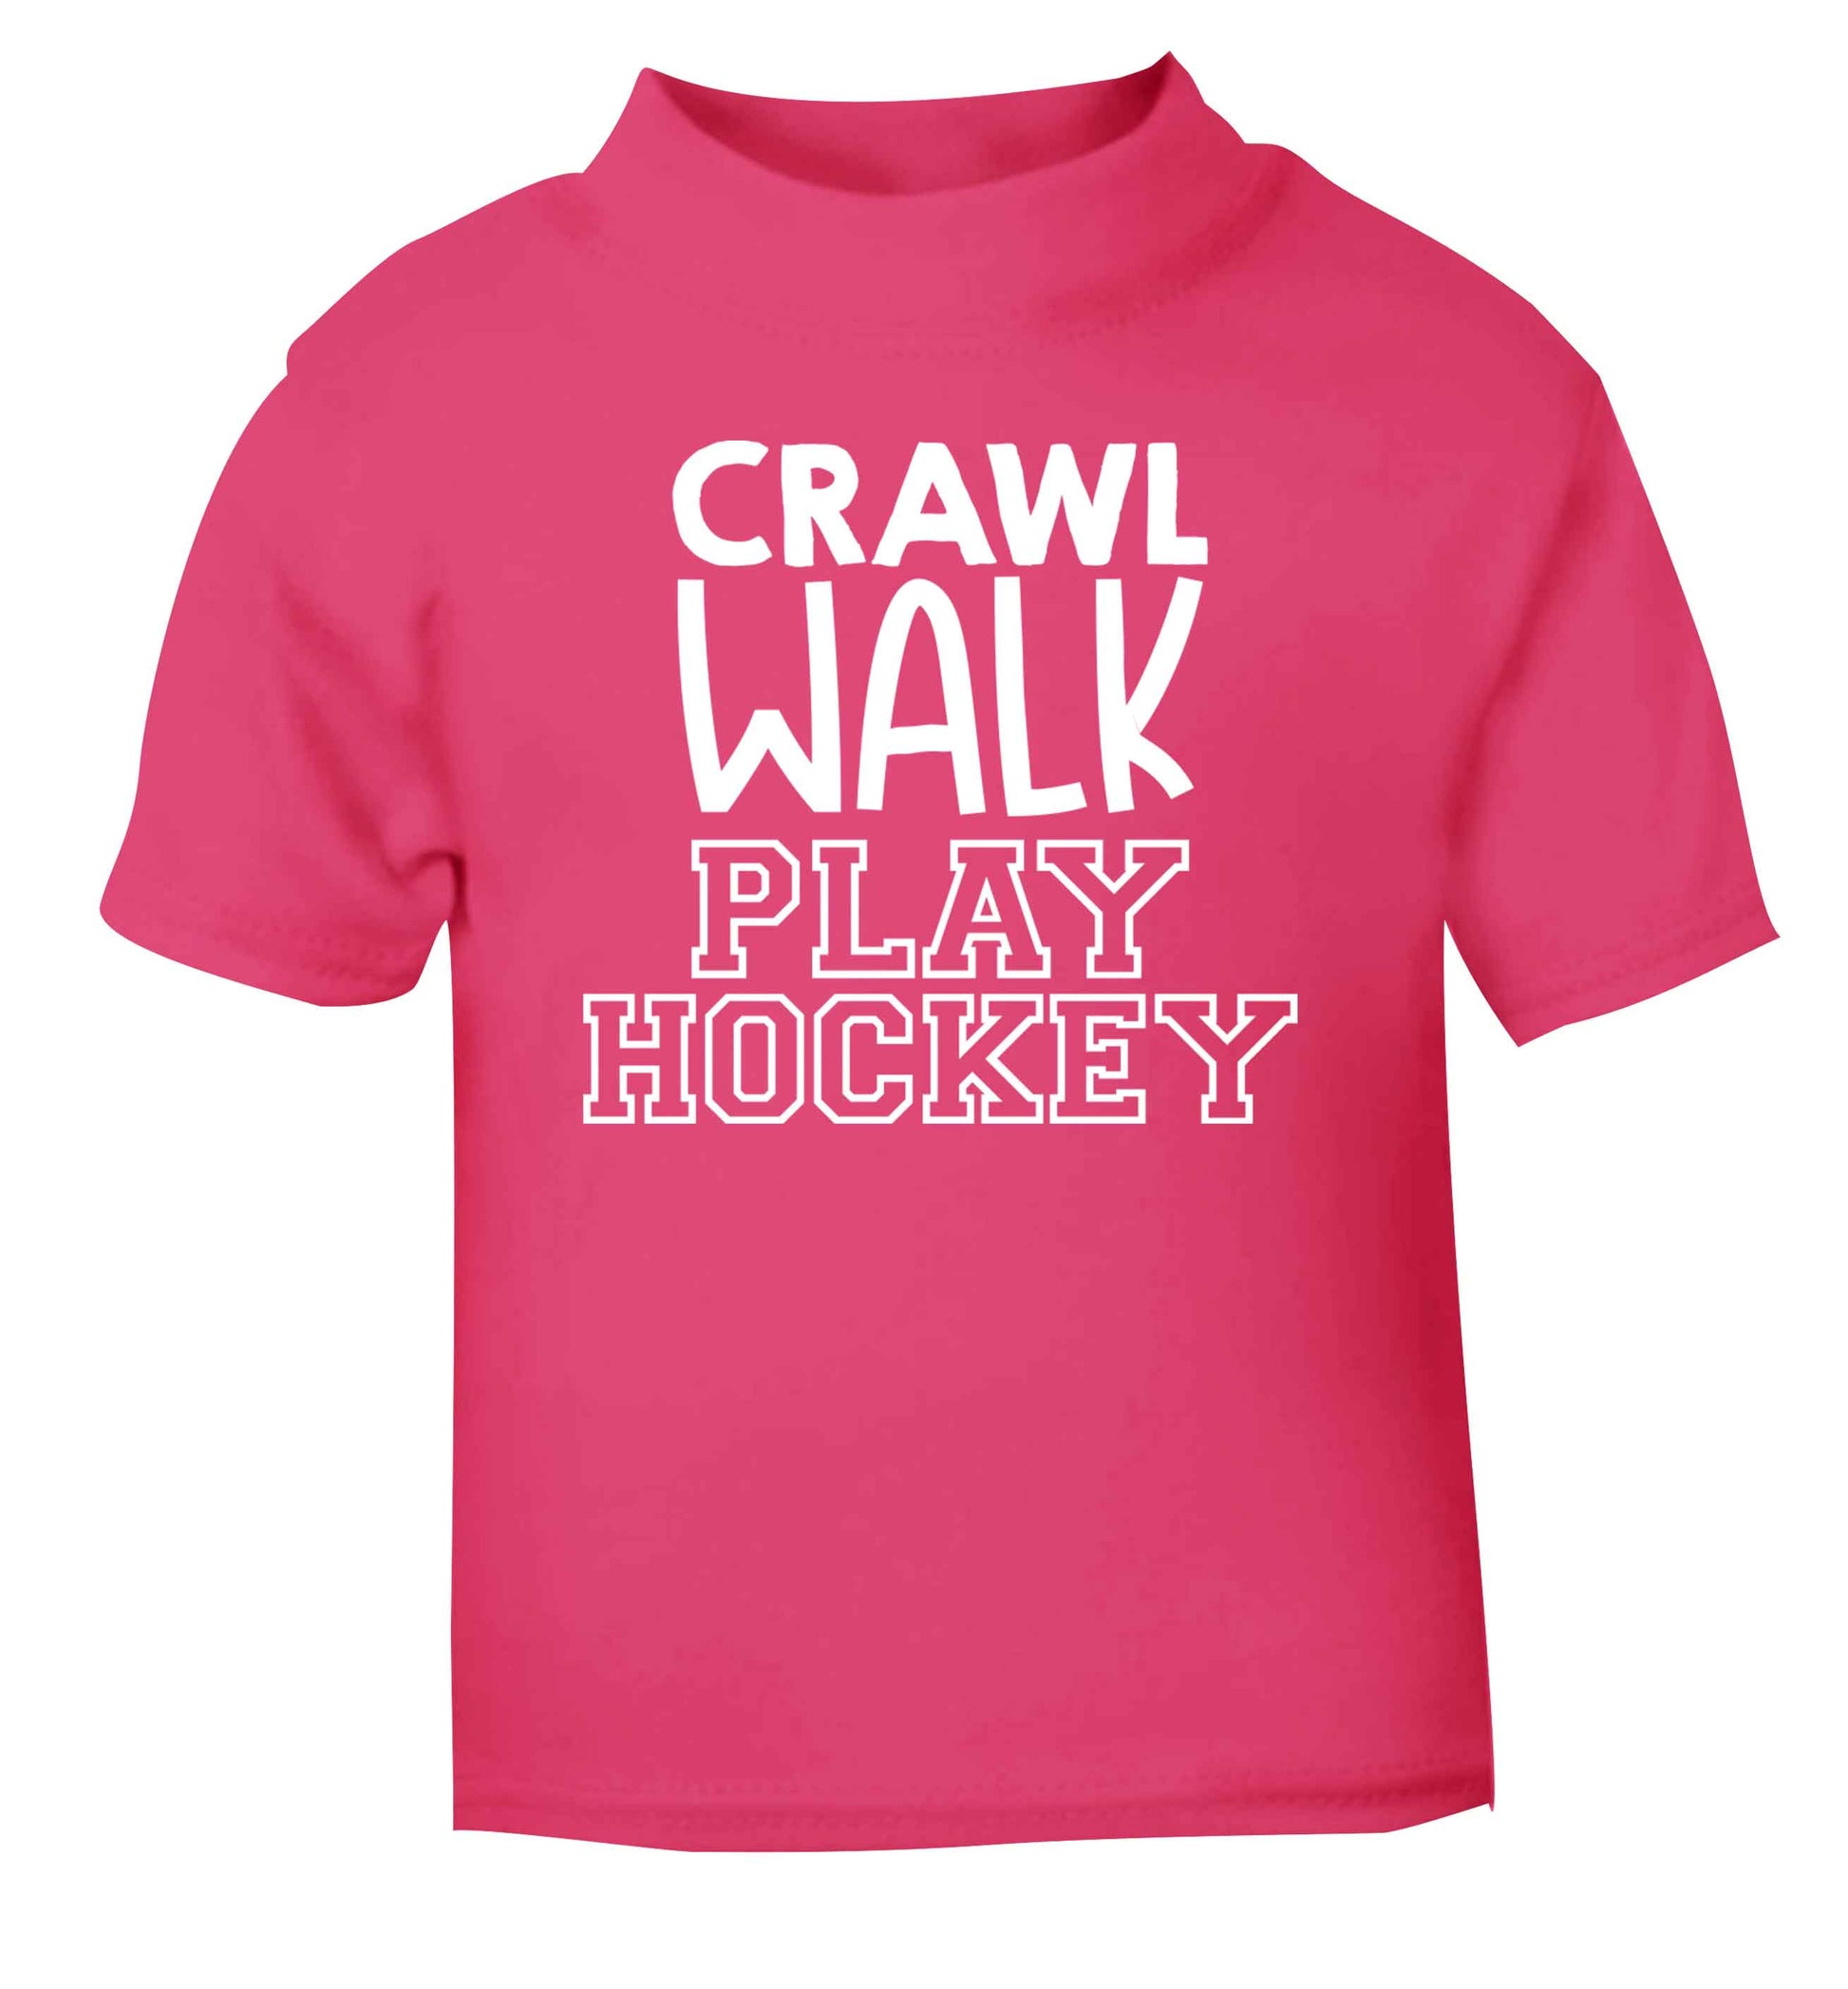 Crawl walk play hockey pink Baby Toddler Tshirt 2 Years